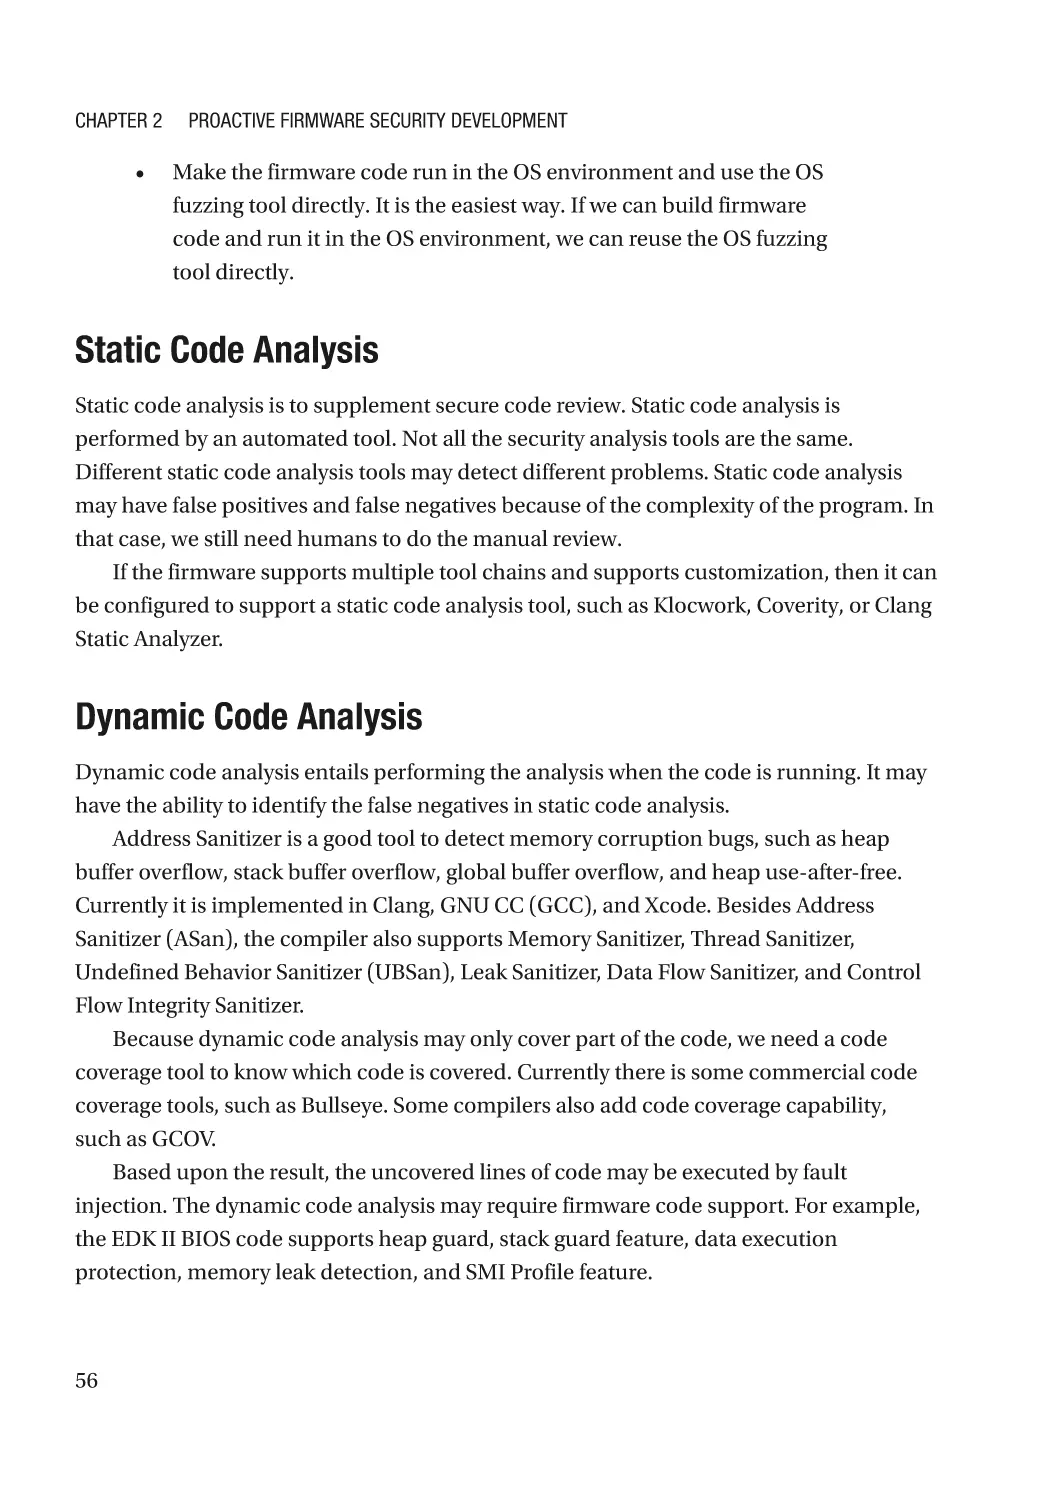 Static Code Analysis
Dynamic Code Analysis